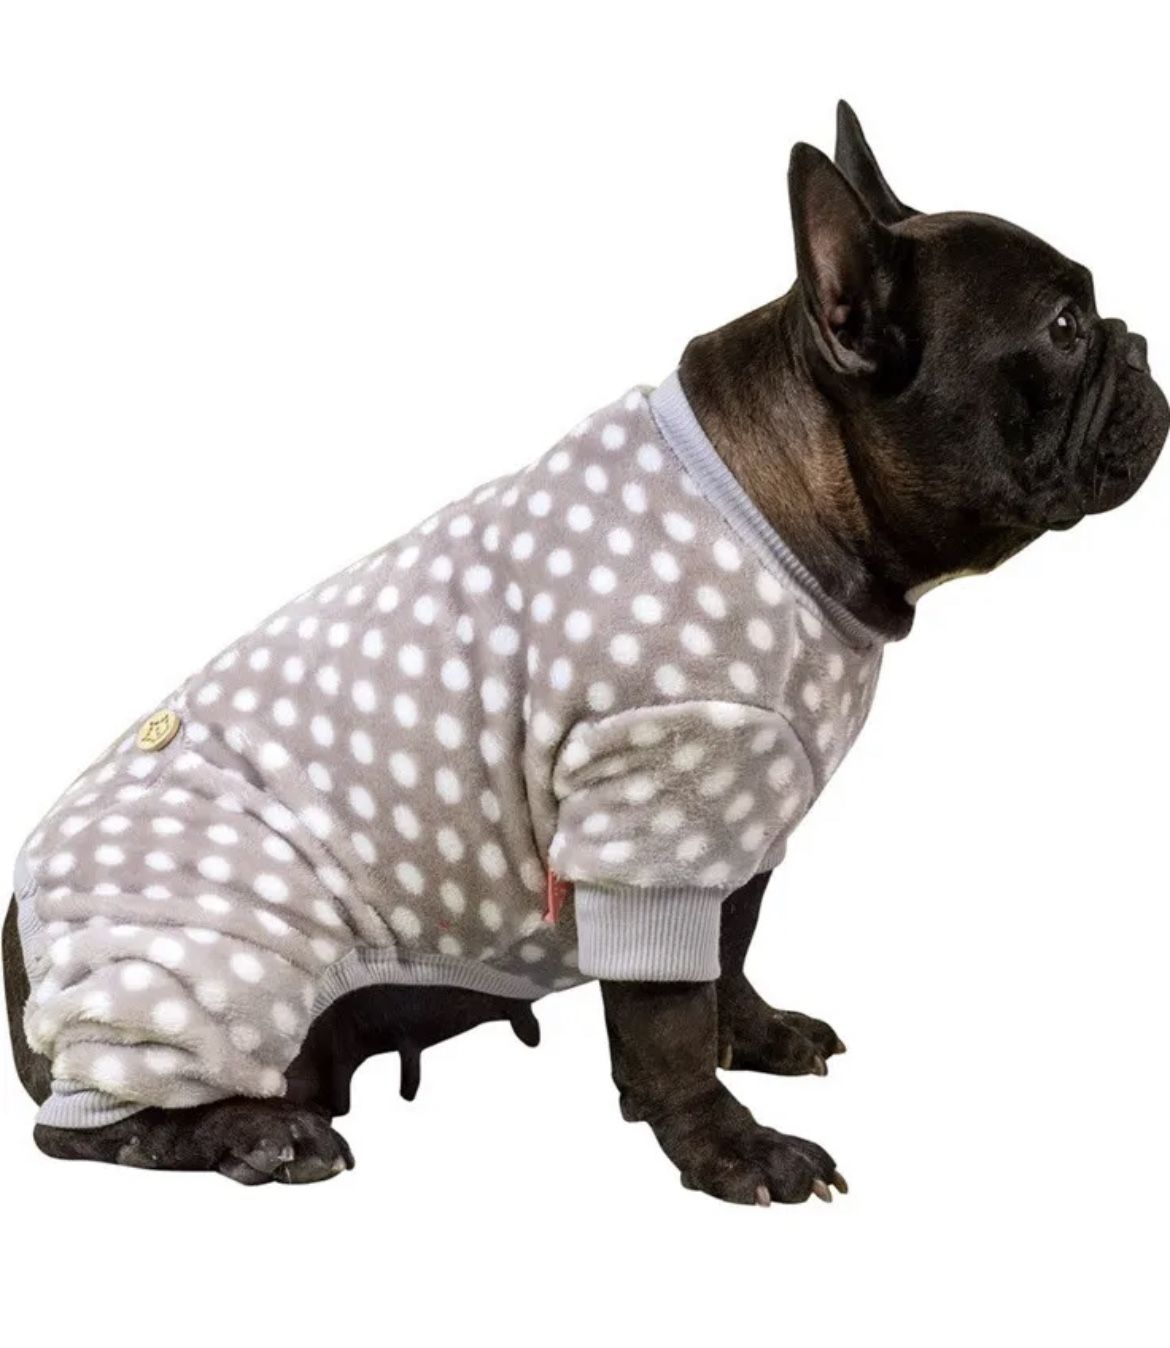 Adorable Kyeese Dog Pajamas Soft Grey With White Polka Dots Size Small